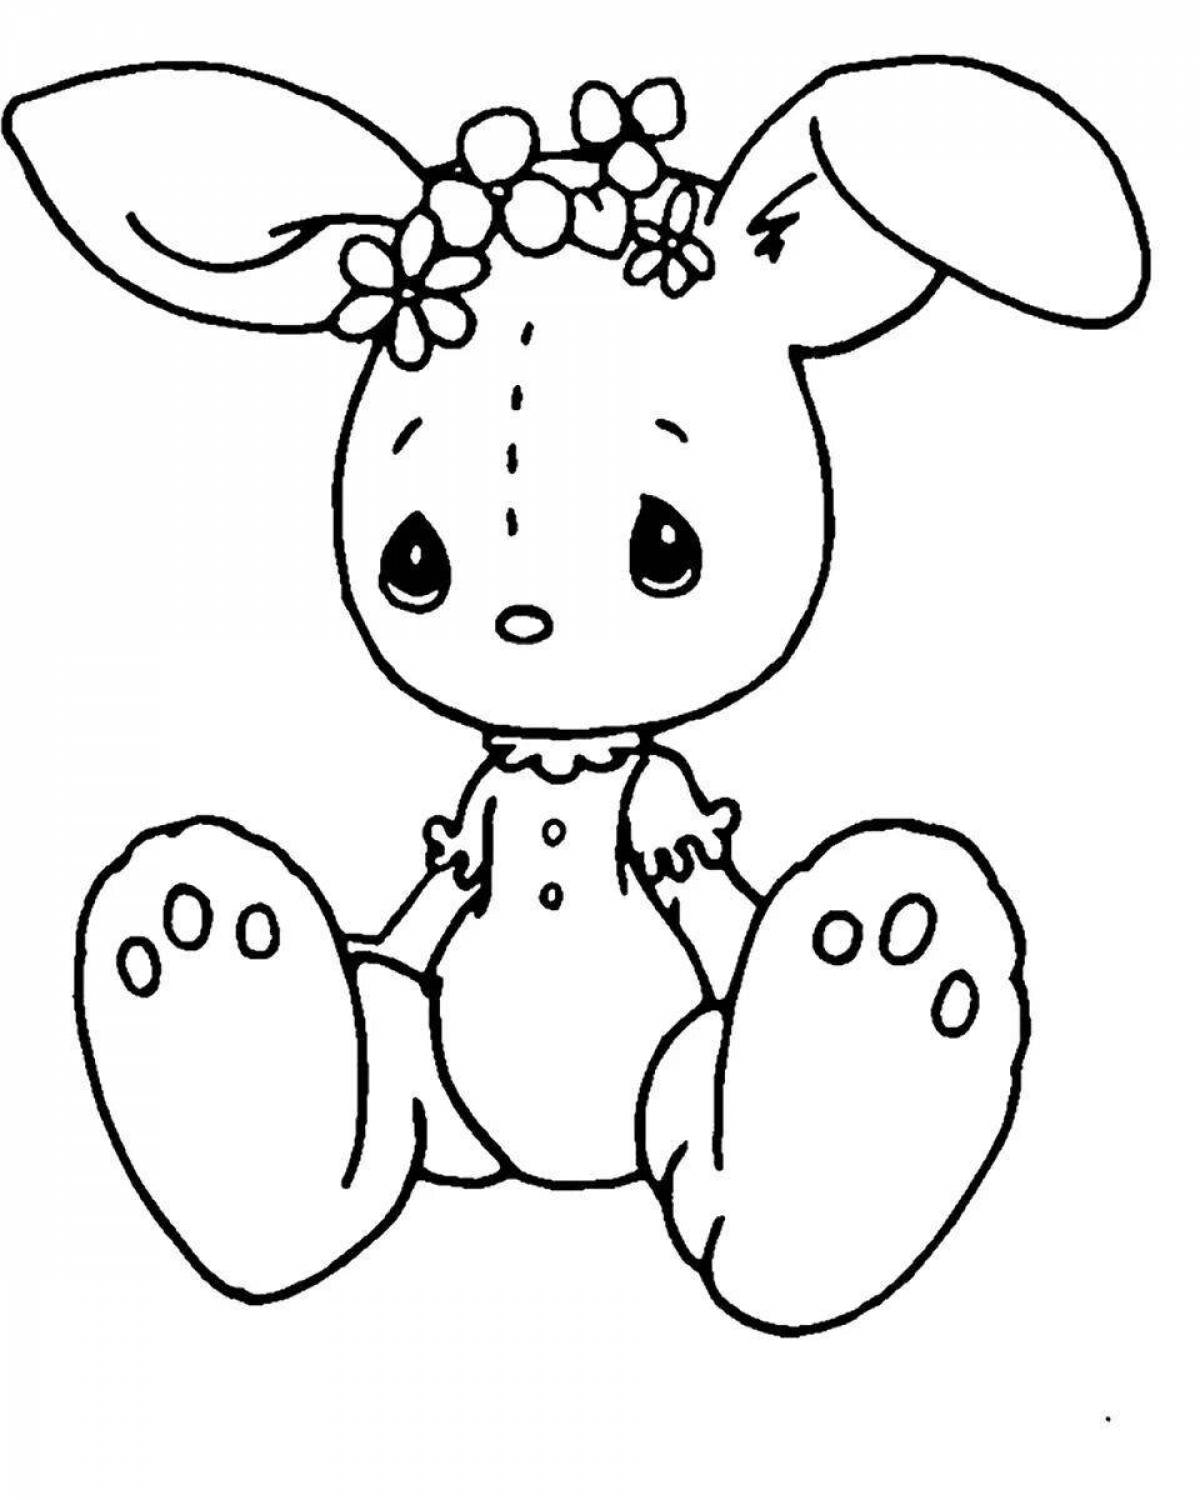 Adorable bing bunny coloring page